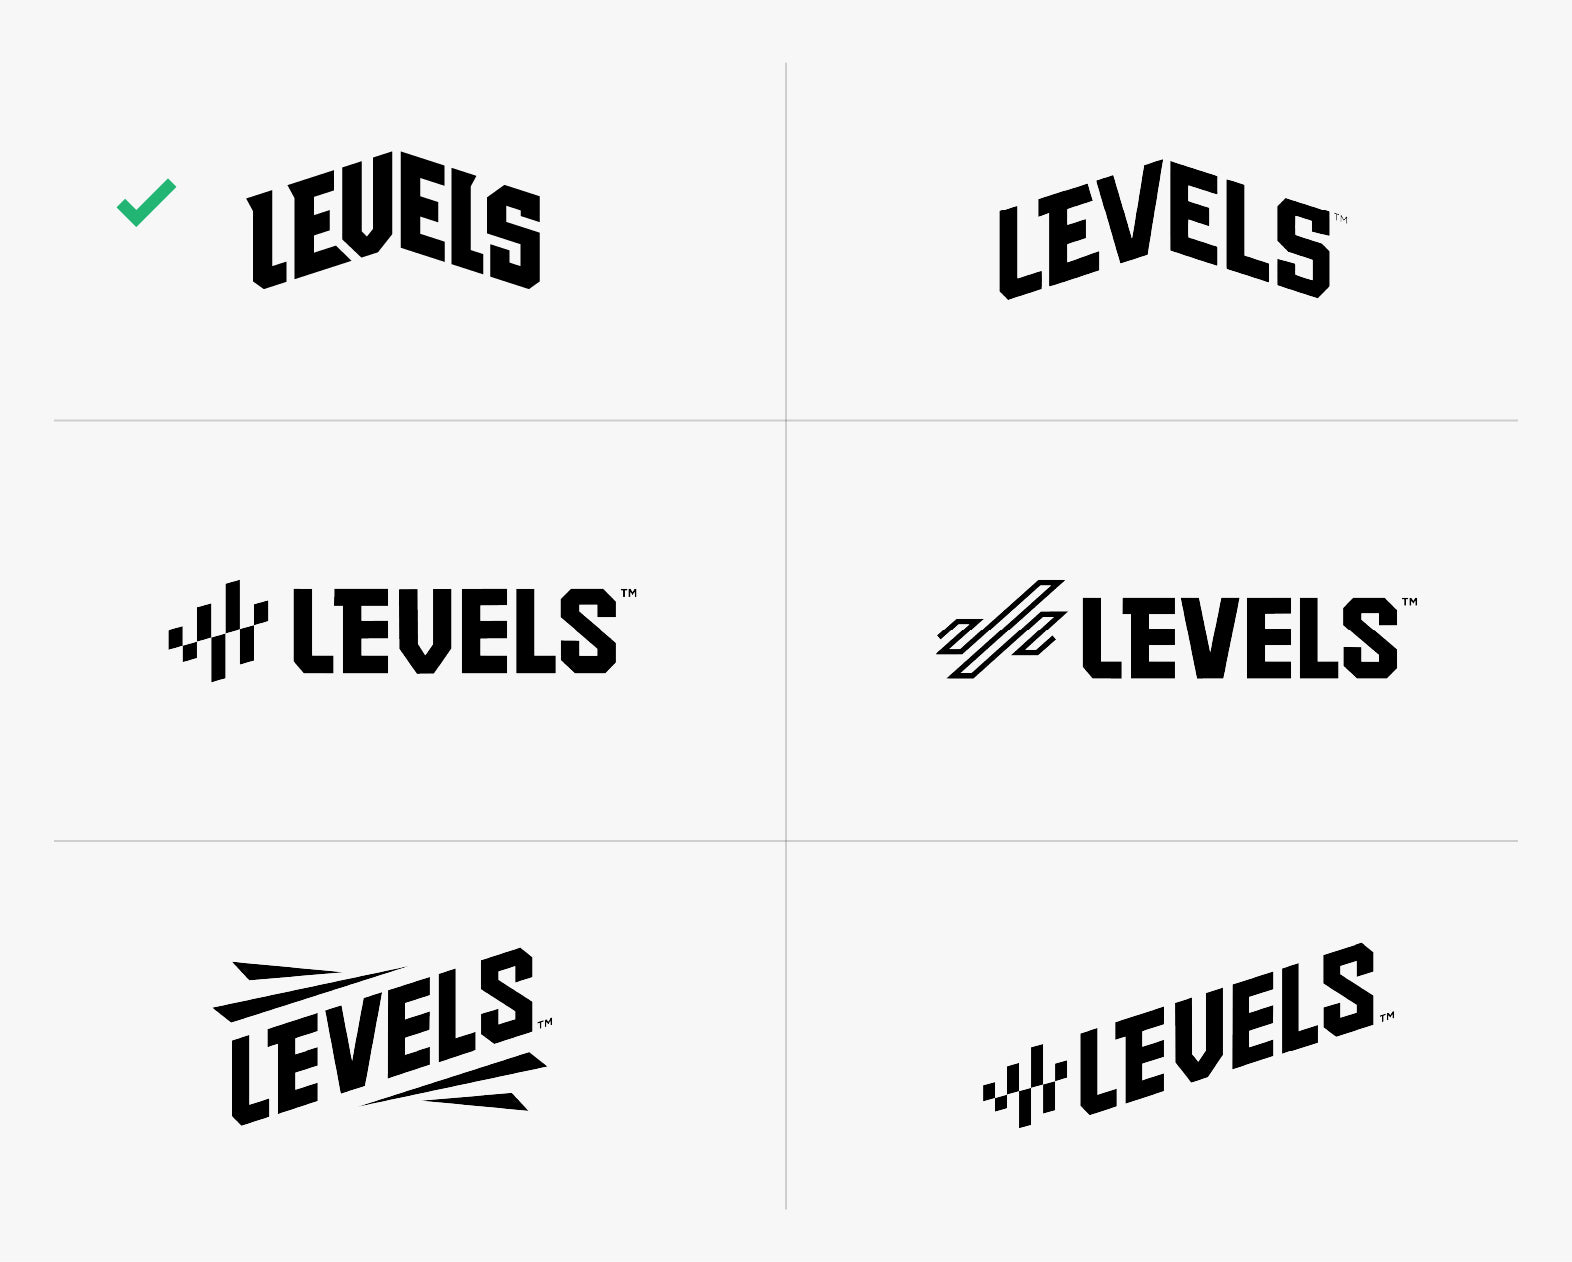 Levels logo concepts